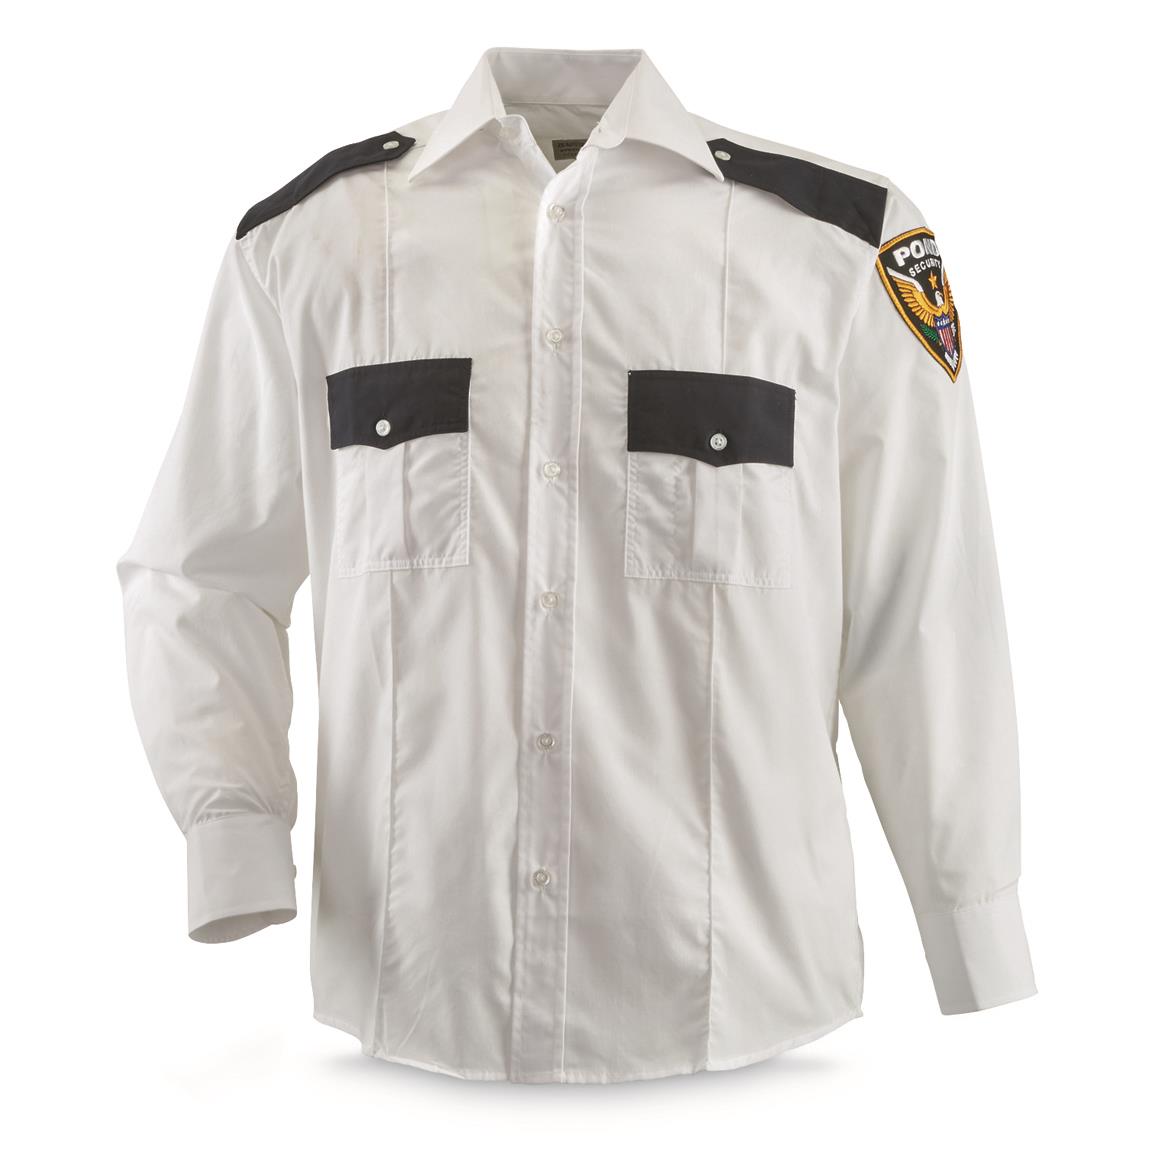 German Municipal Surplus Long Sleeve Security Shirt, New, White